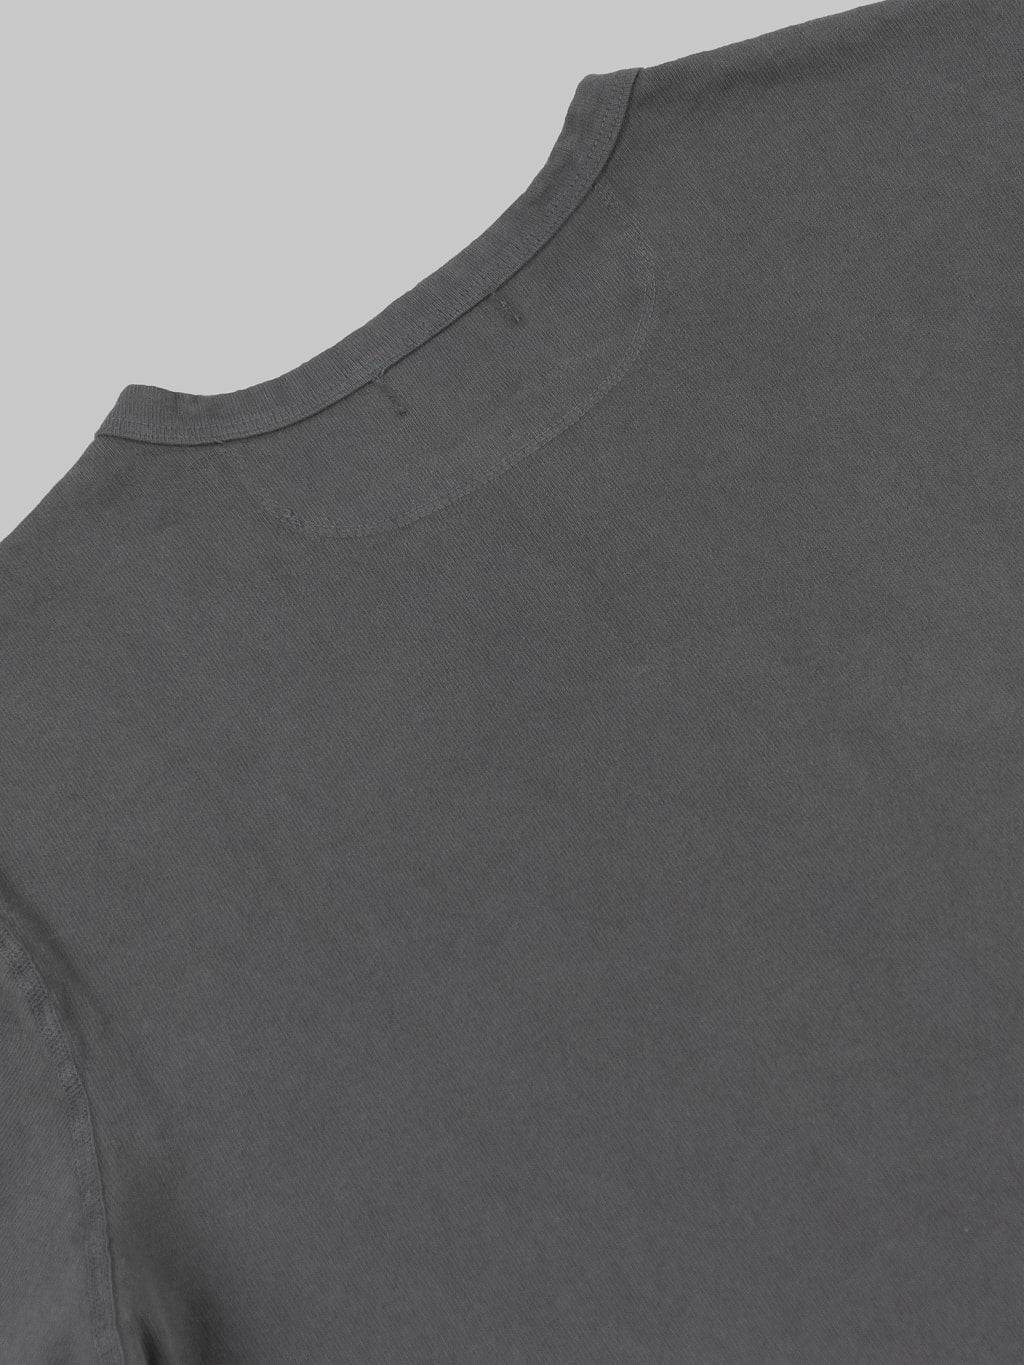 Freenote Cloth 13 Ounce Henley Long Sleeve Midnight grey texture